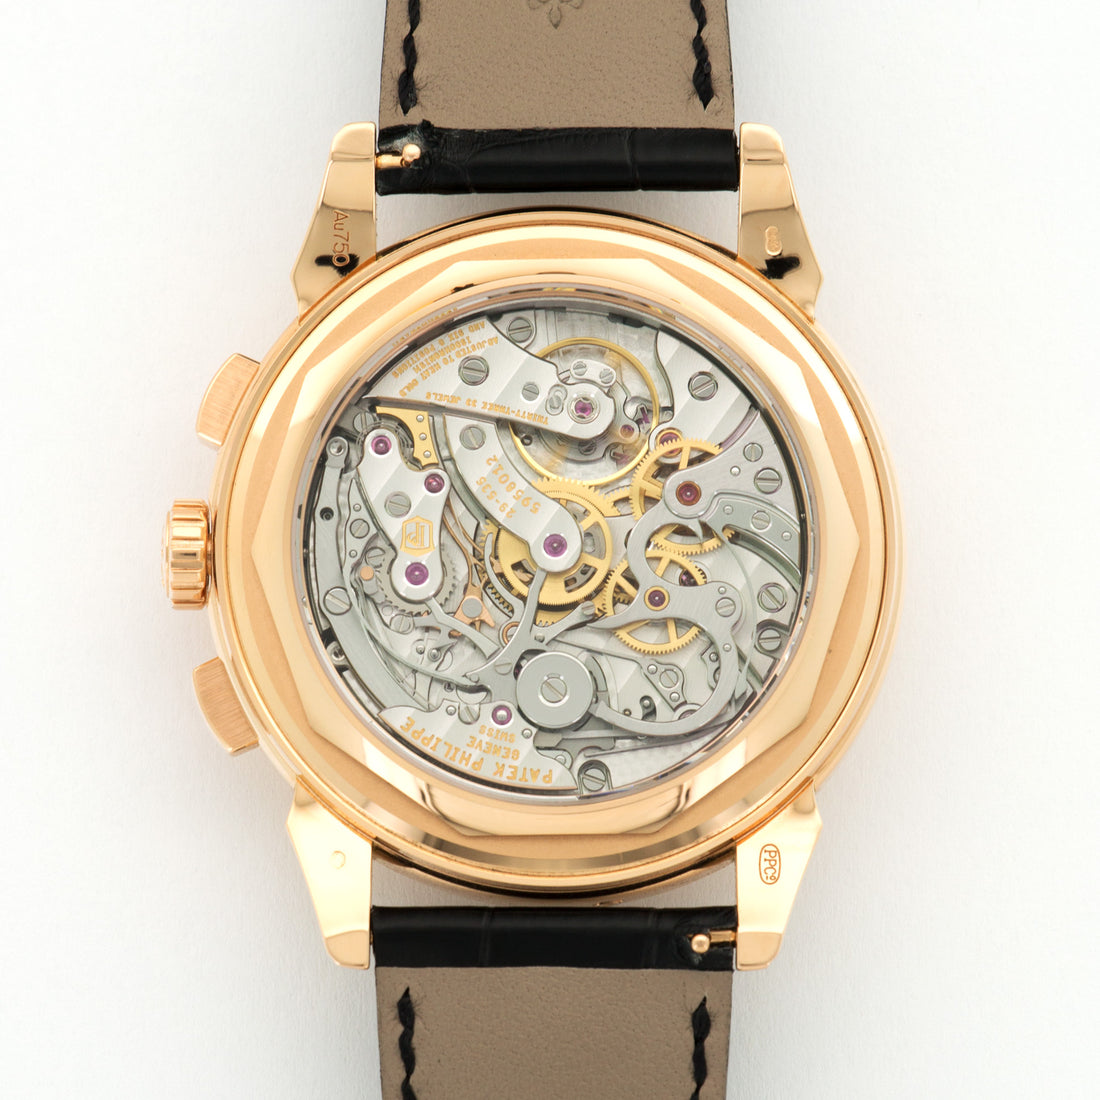 Patek Philippe Rose Gold Perpetual Calendar Watch Ref. 5270R